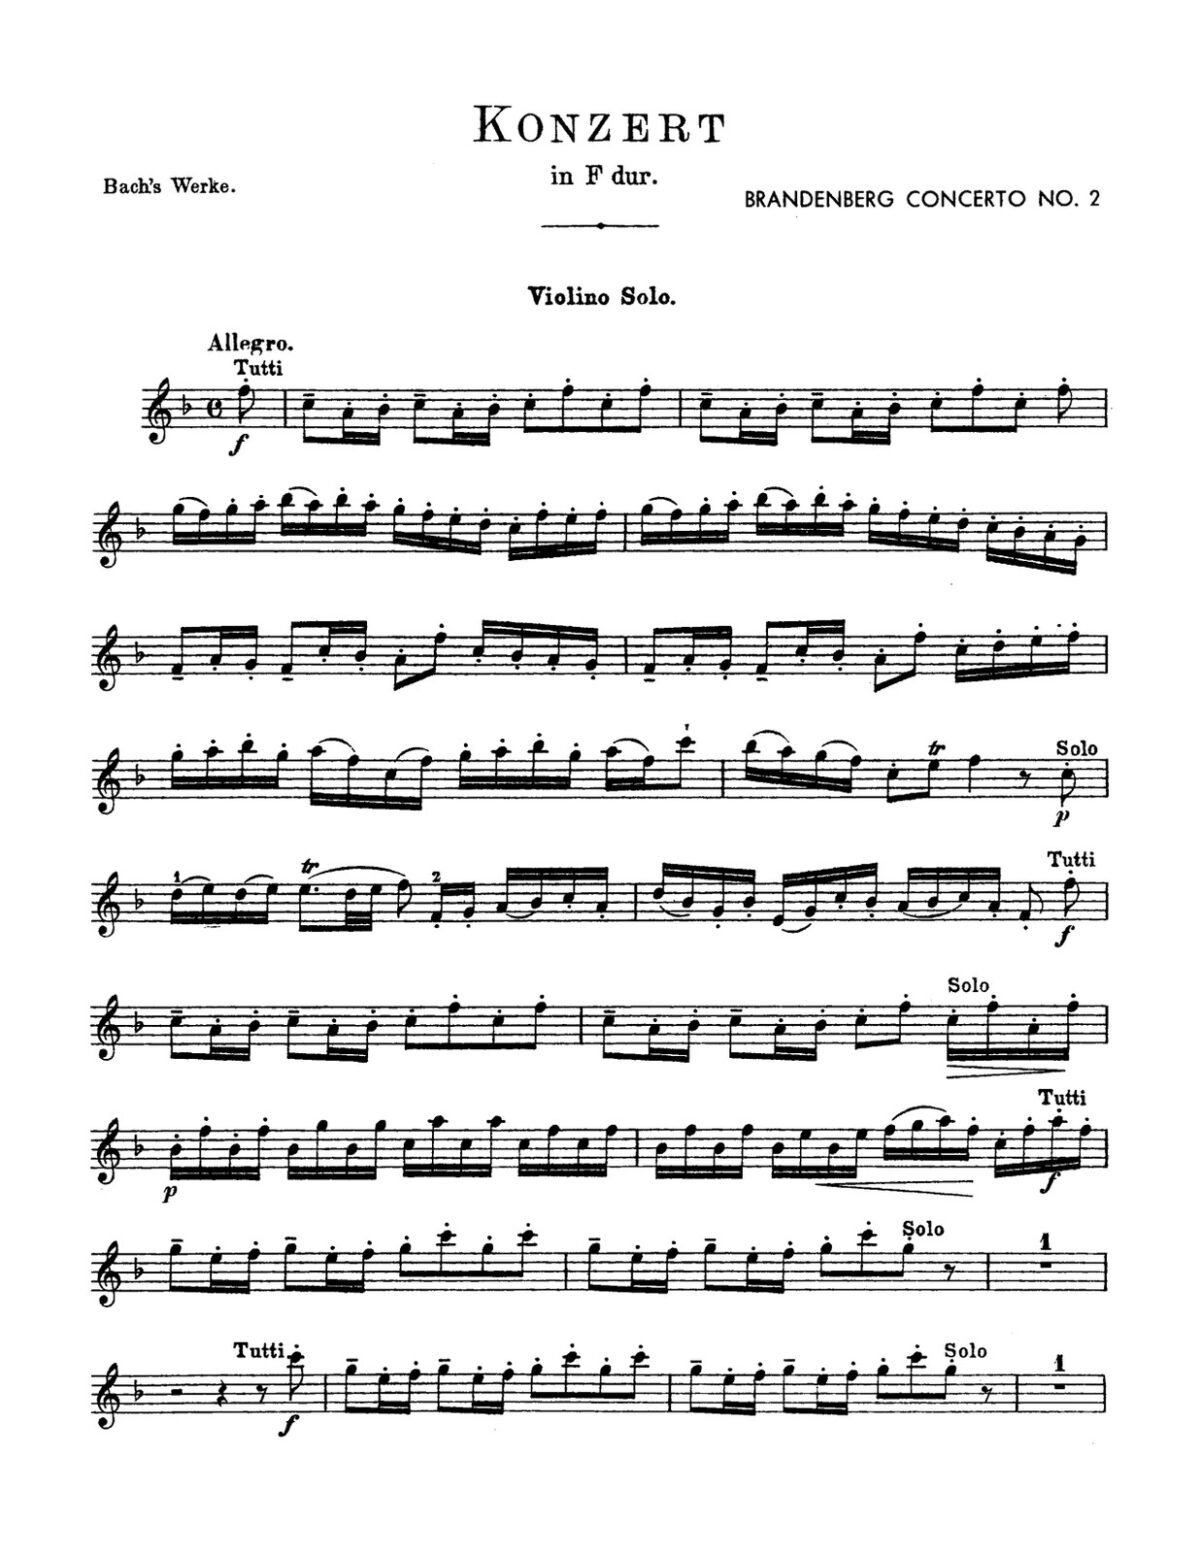 Bach's Brandenburg Concerto No.2 (Score & Orchestral Parts) by 